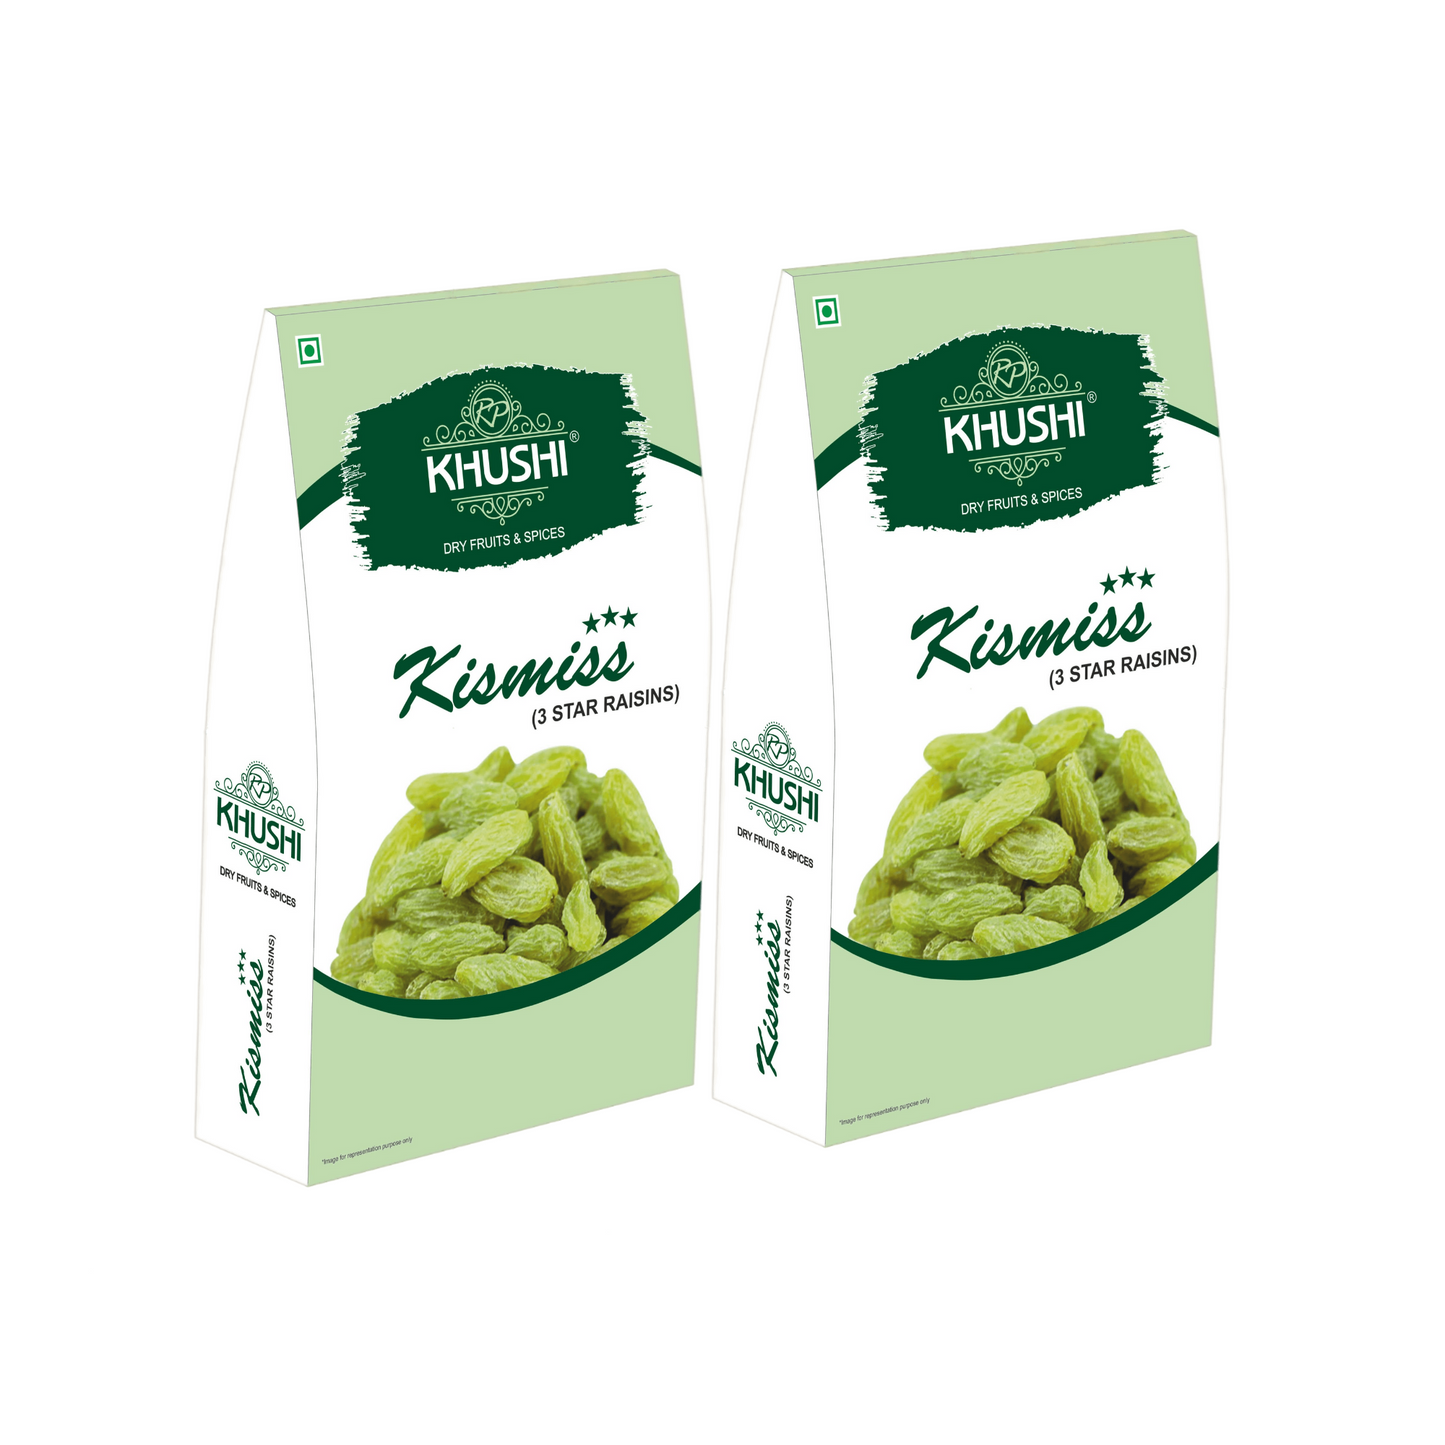 KHUSHI 100% Natural Premium Green Raisins 3 Star | Hari Dakh | Indian Kismish |